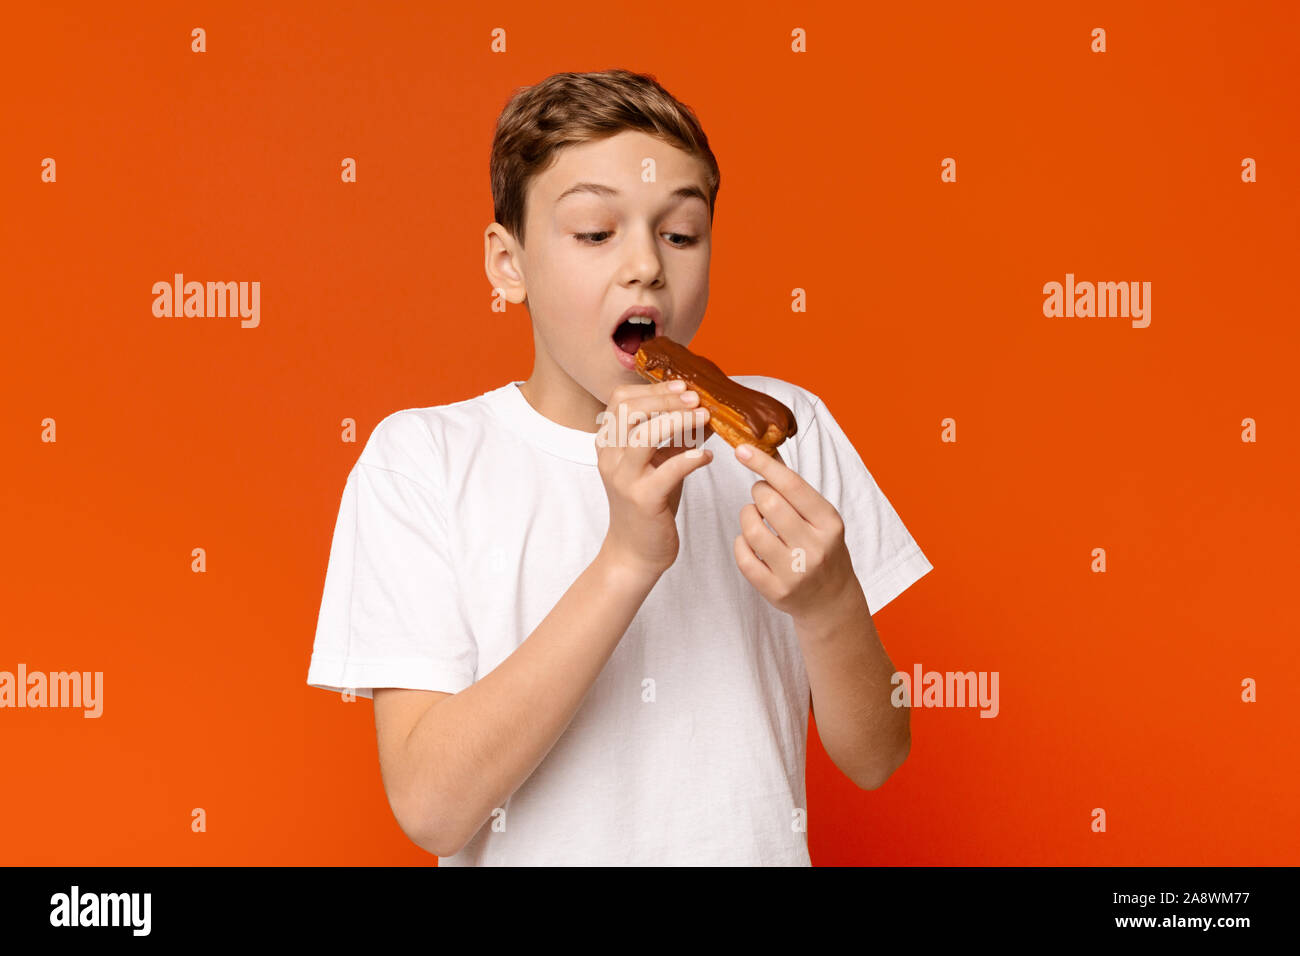 Teenage guy enjoying chocolate eclair, orange background Stock Photo